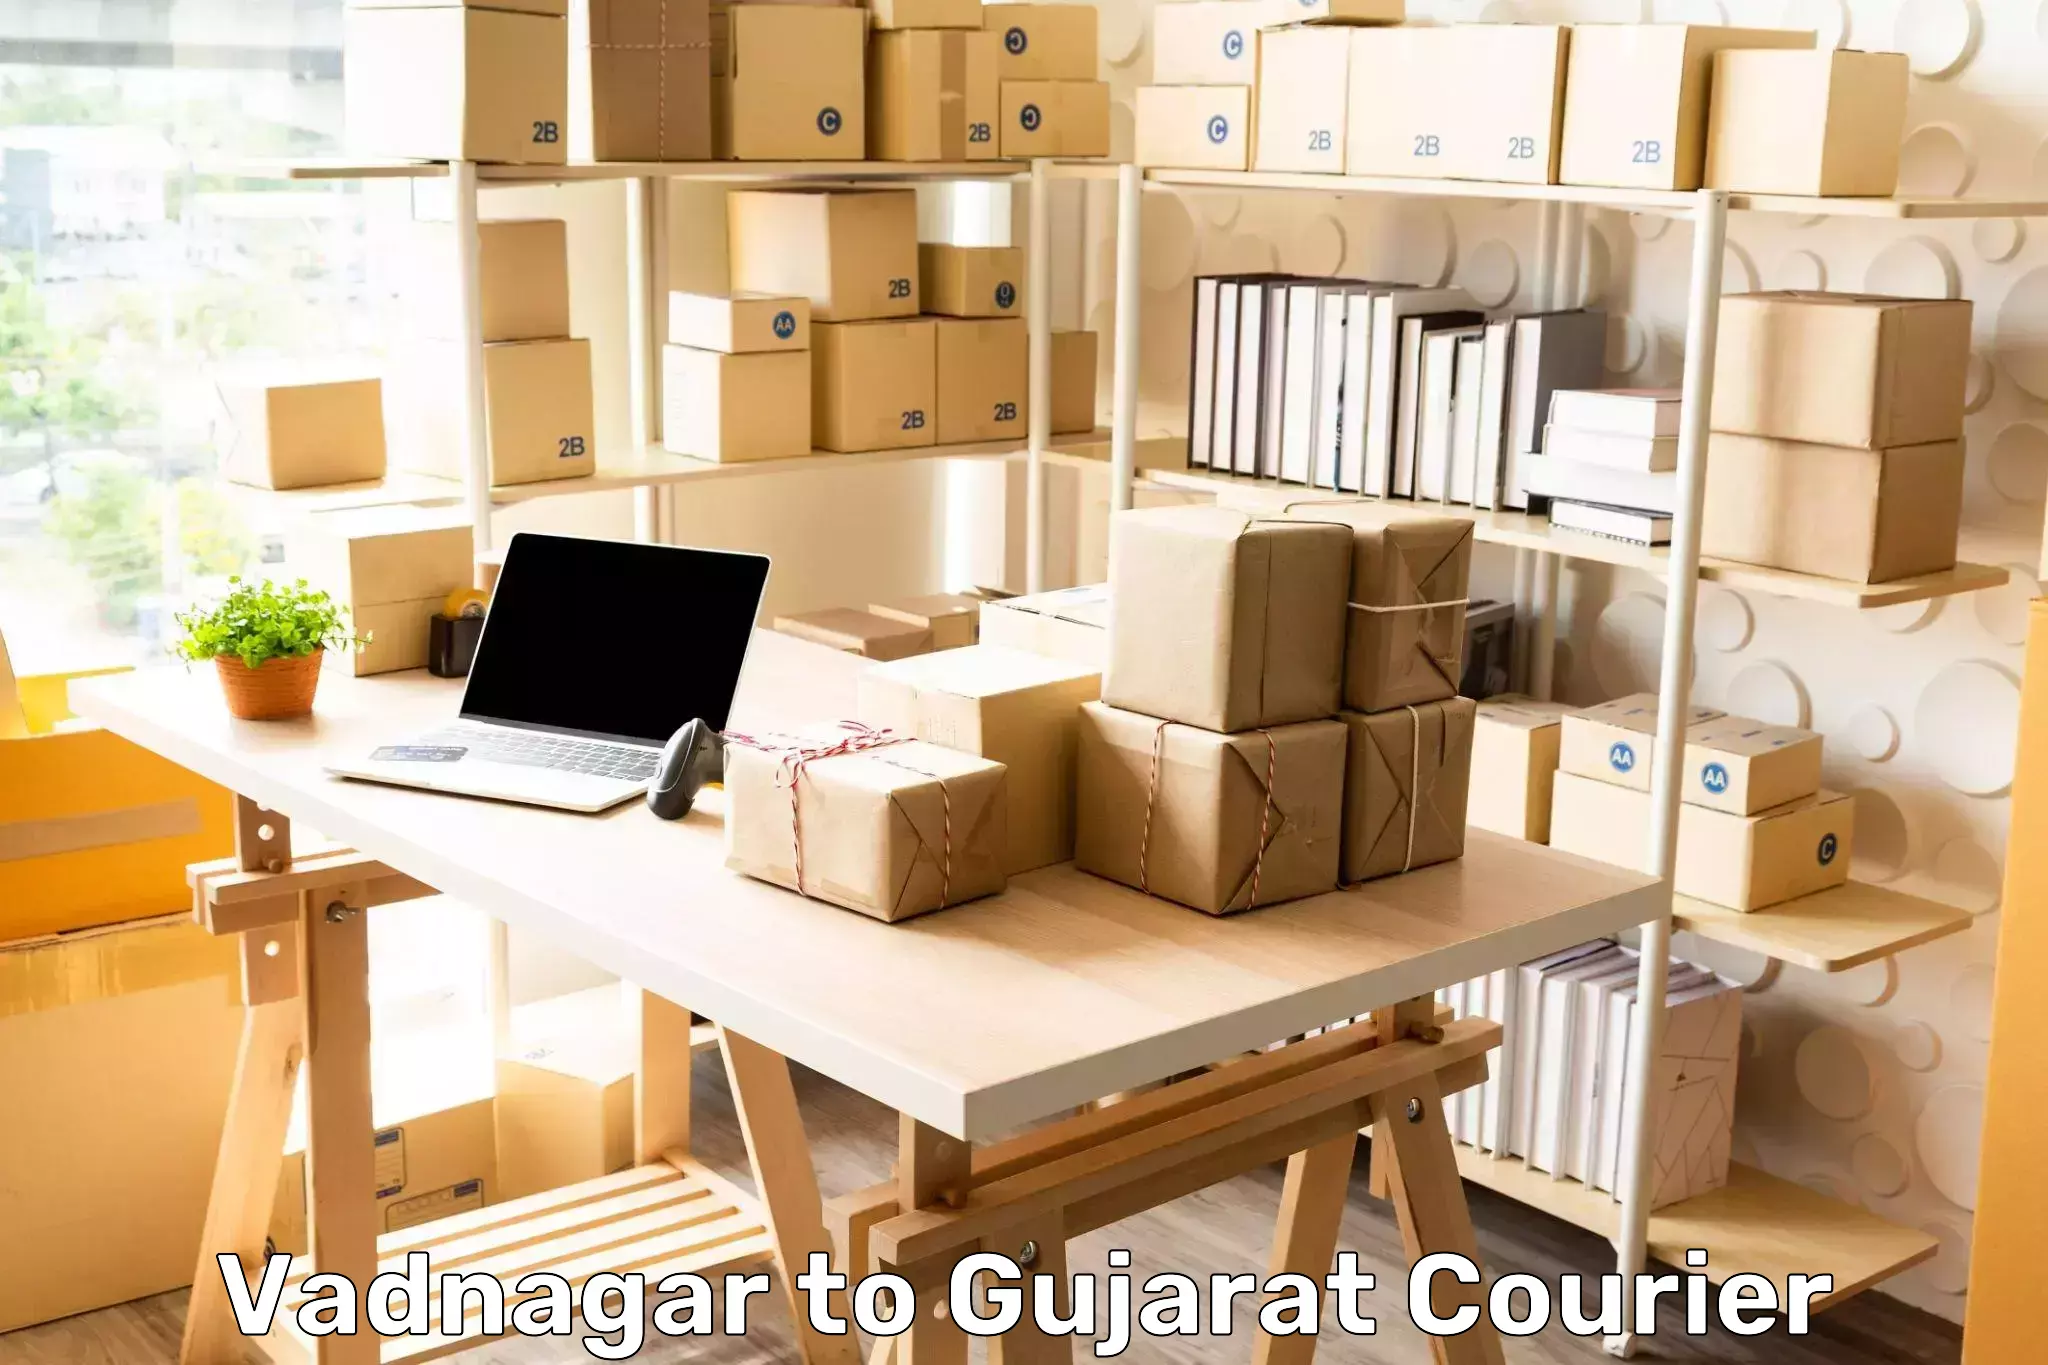 Package tracking in Vadnagar to Gujarat